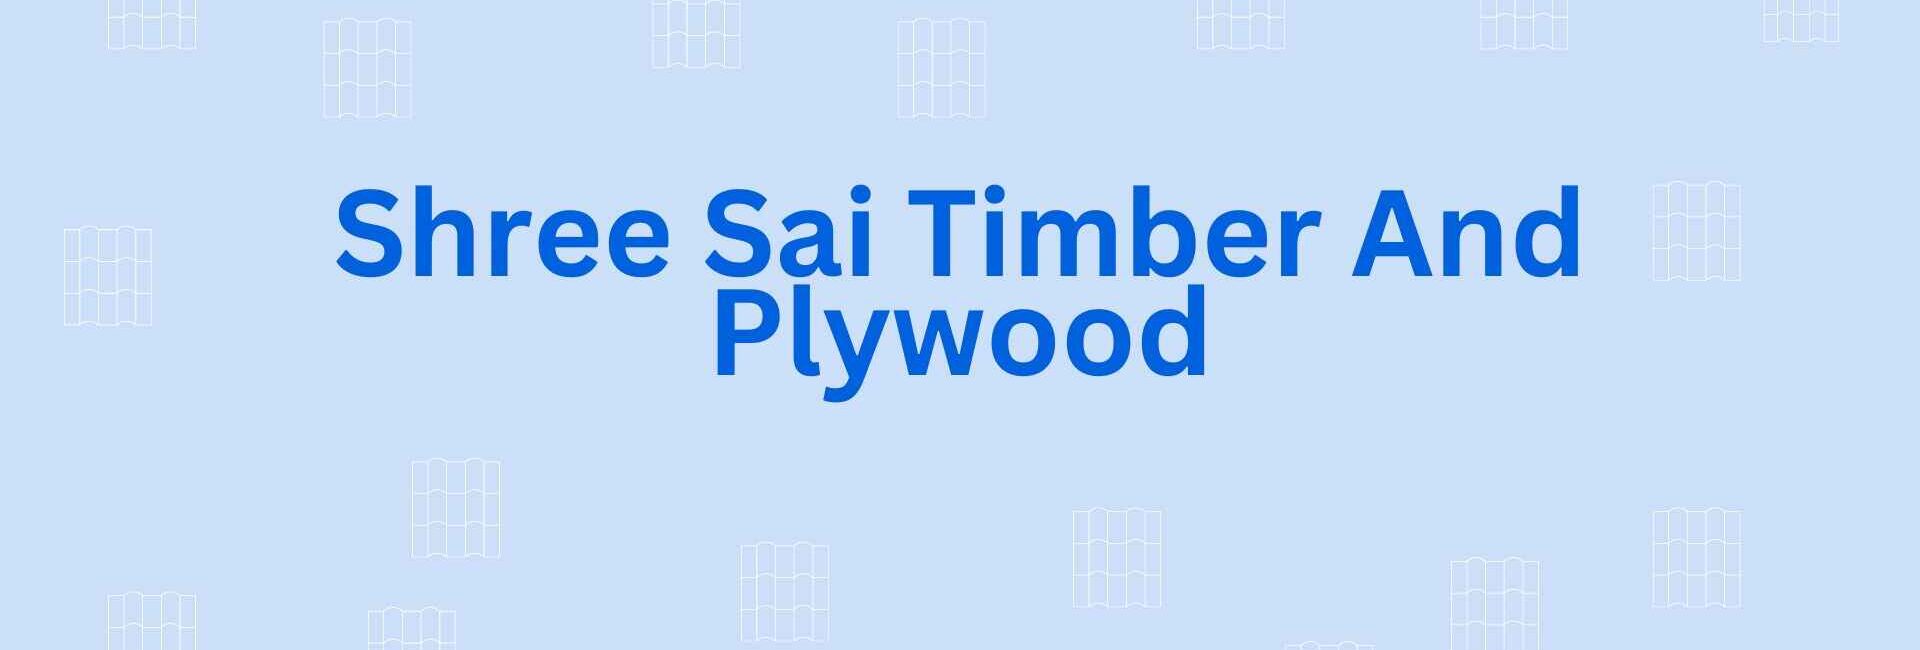 Shree Sai Timber And Plywood - Flooring Dealer in Noida